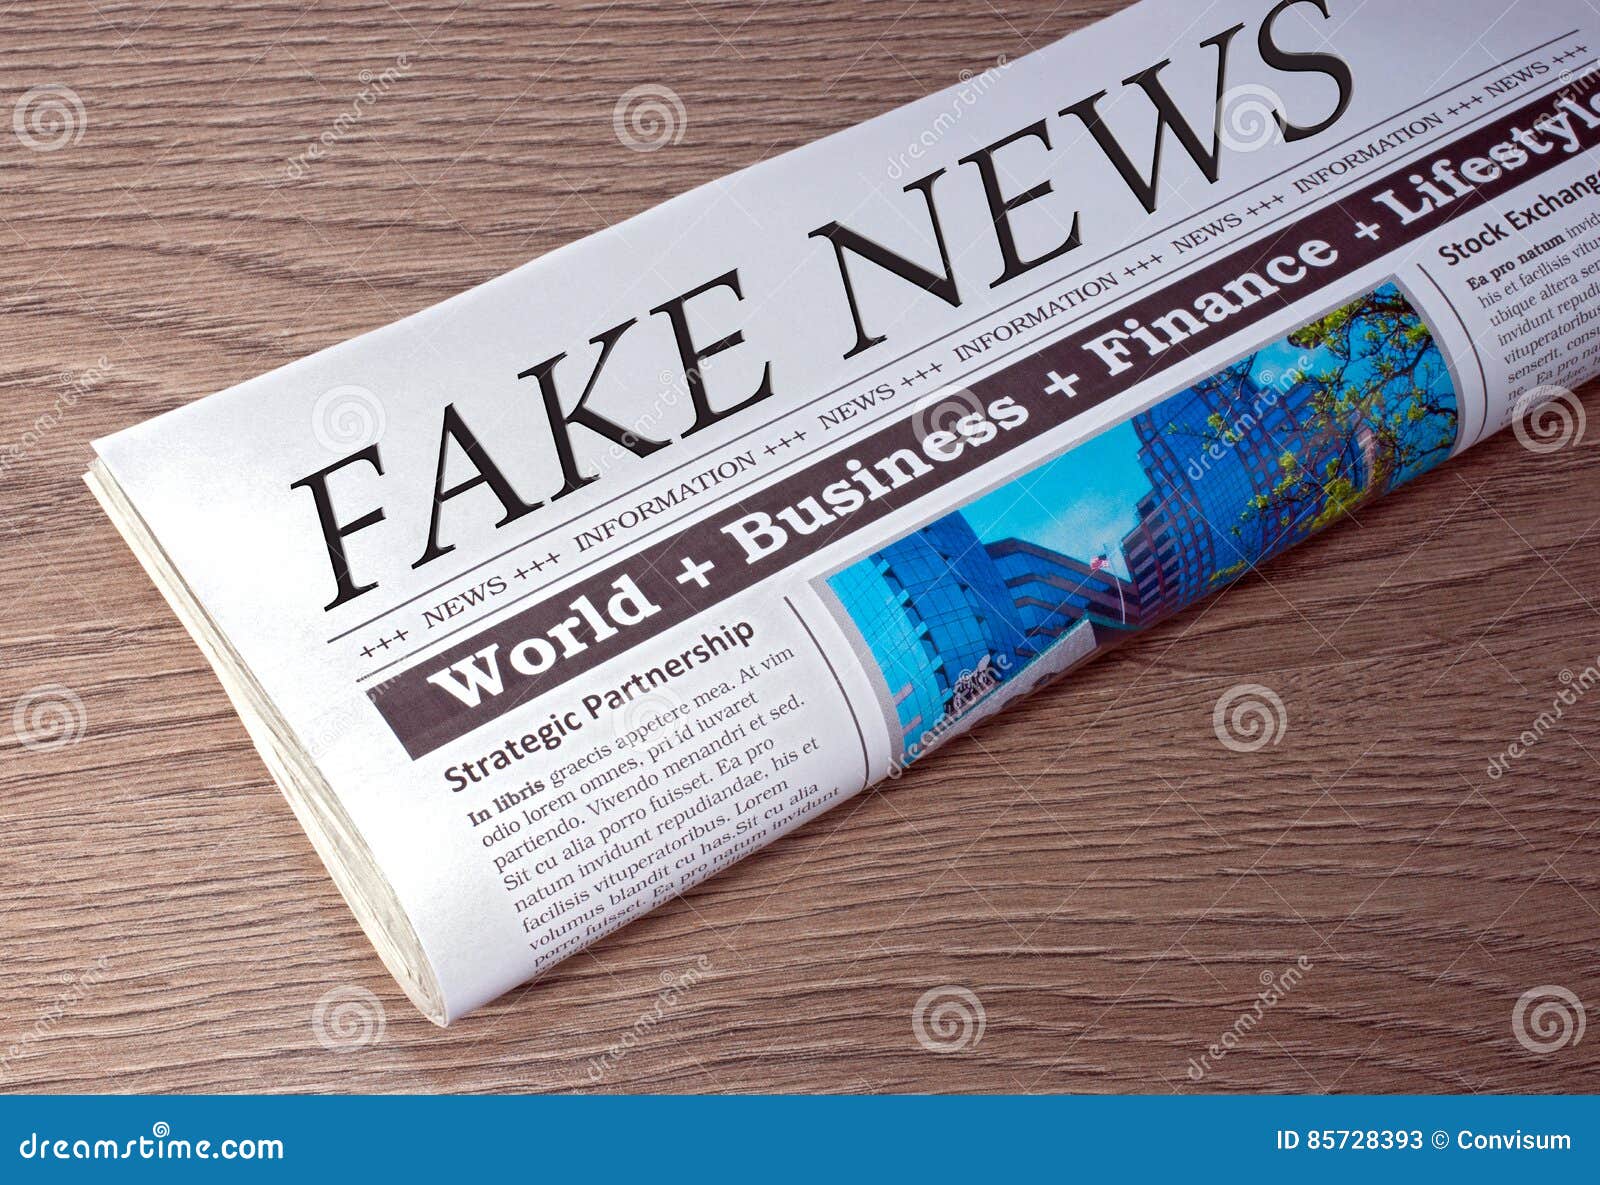 fake news newspaper